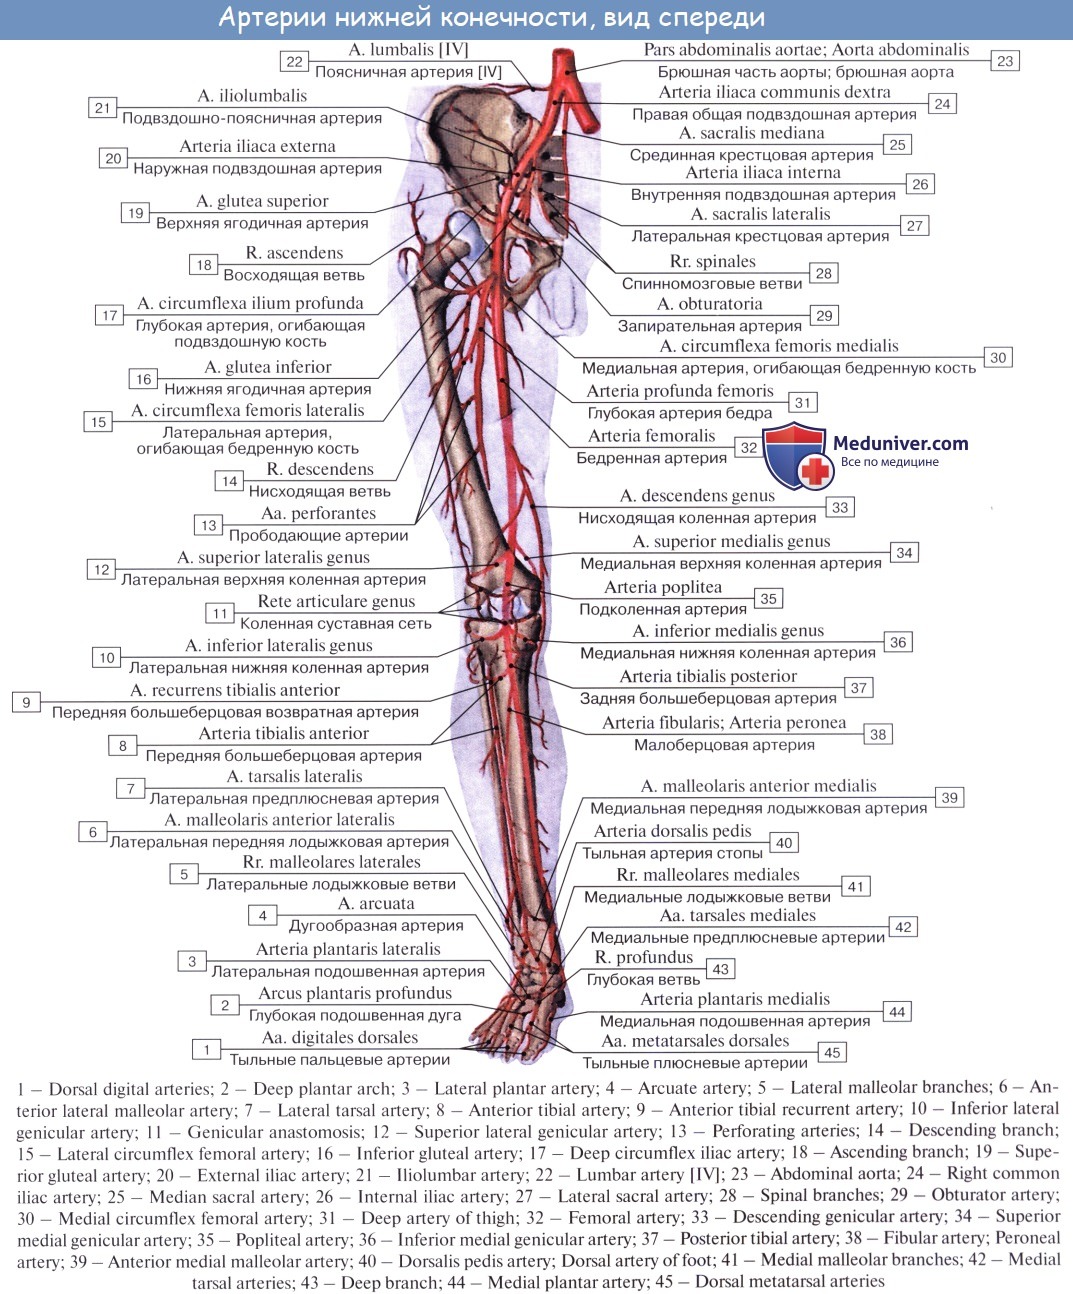 Внутренняя вена латынь. Ветви артерии femoralis. Бедренная артерия анатомия. Схема артерий нижних конечностей вид спереди. Артерии верхней конечности анатомия на латинском.